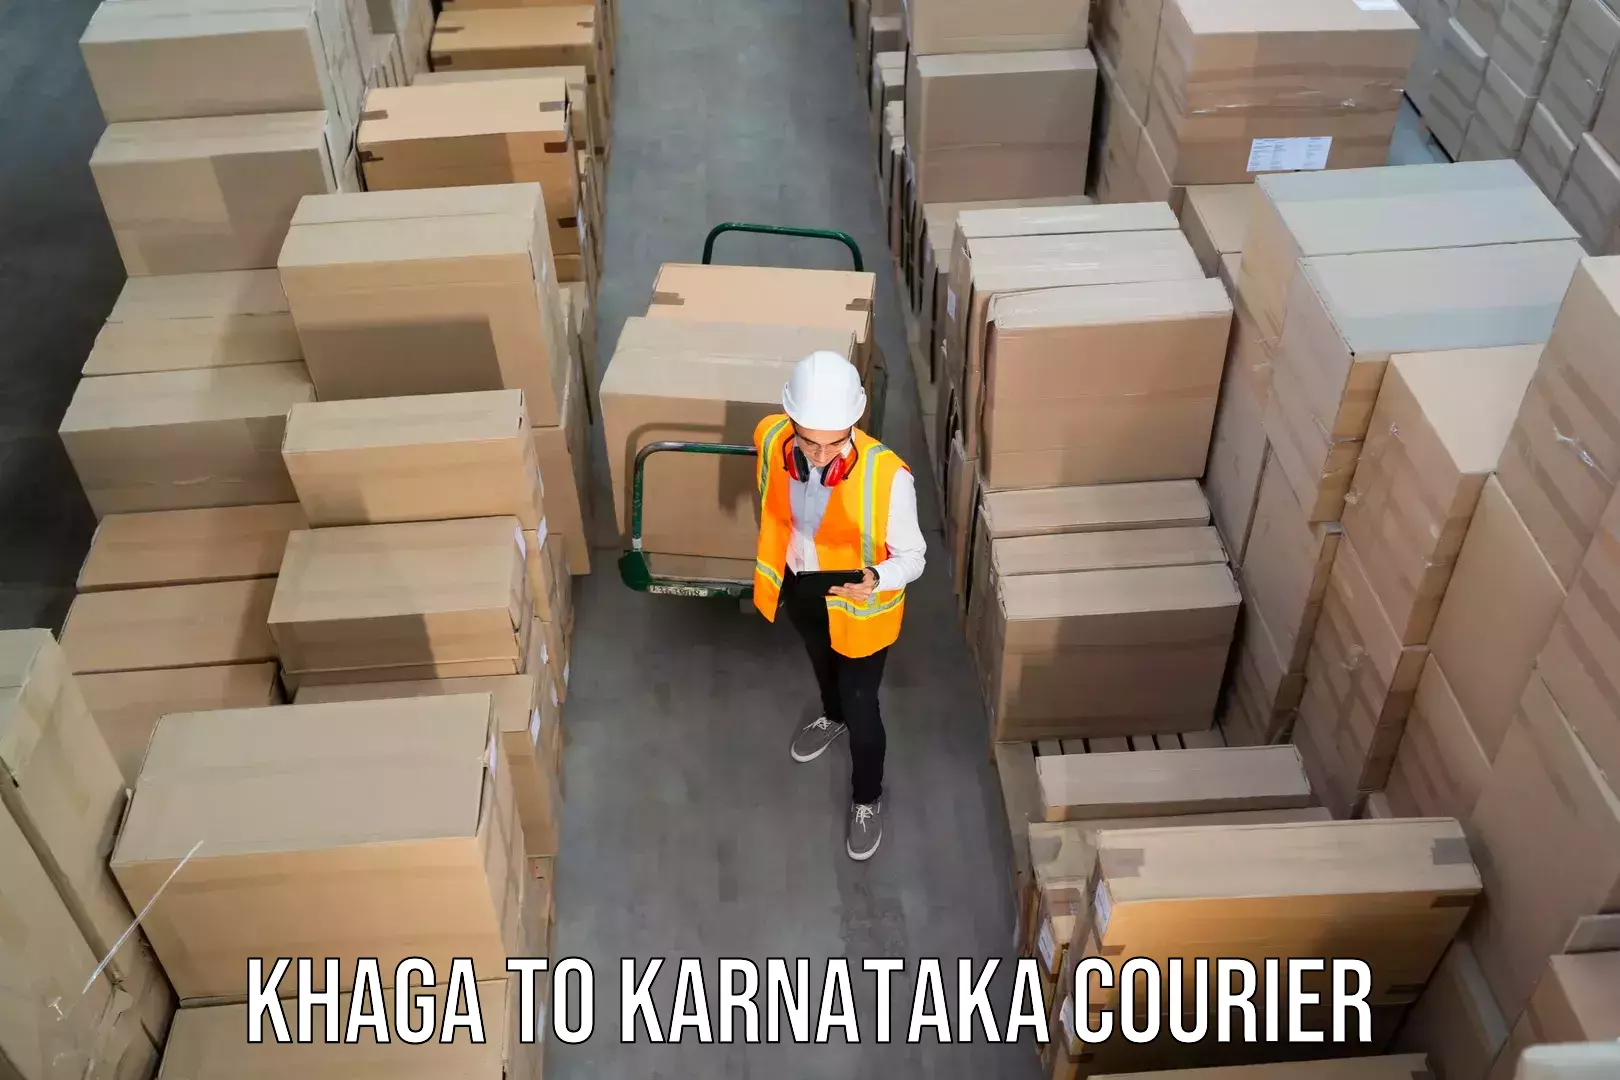 24-hour courier service Khaga to Karnataka